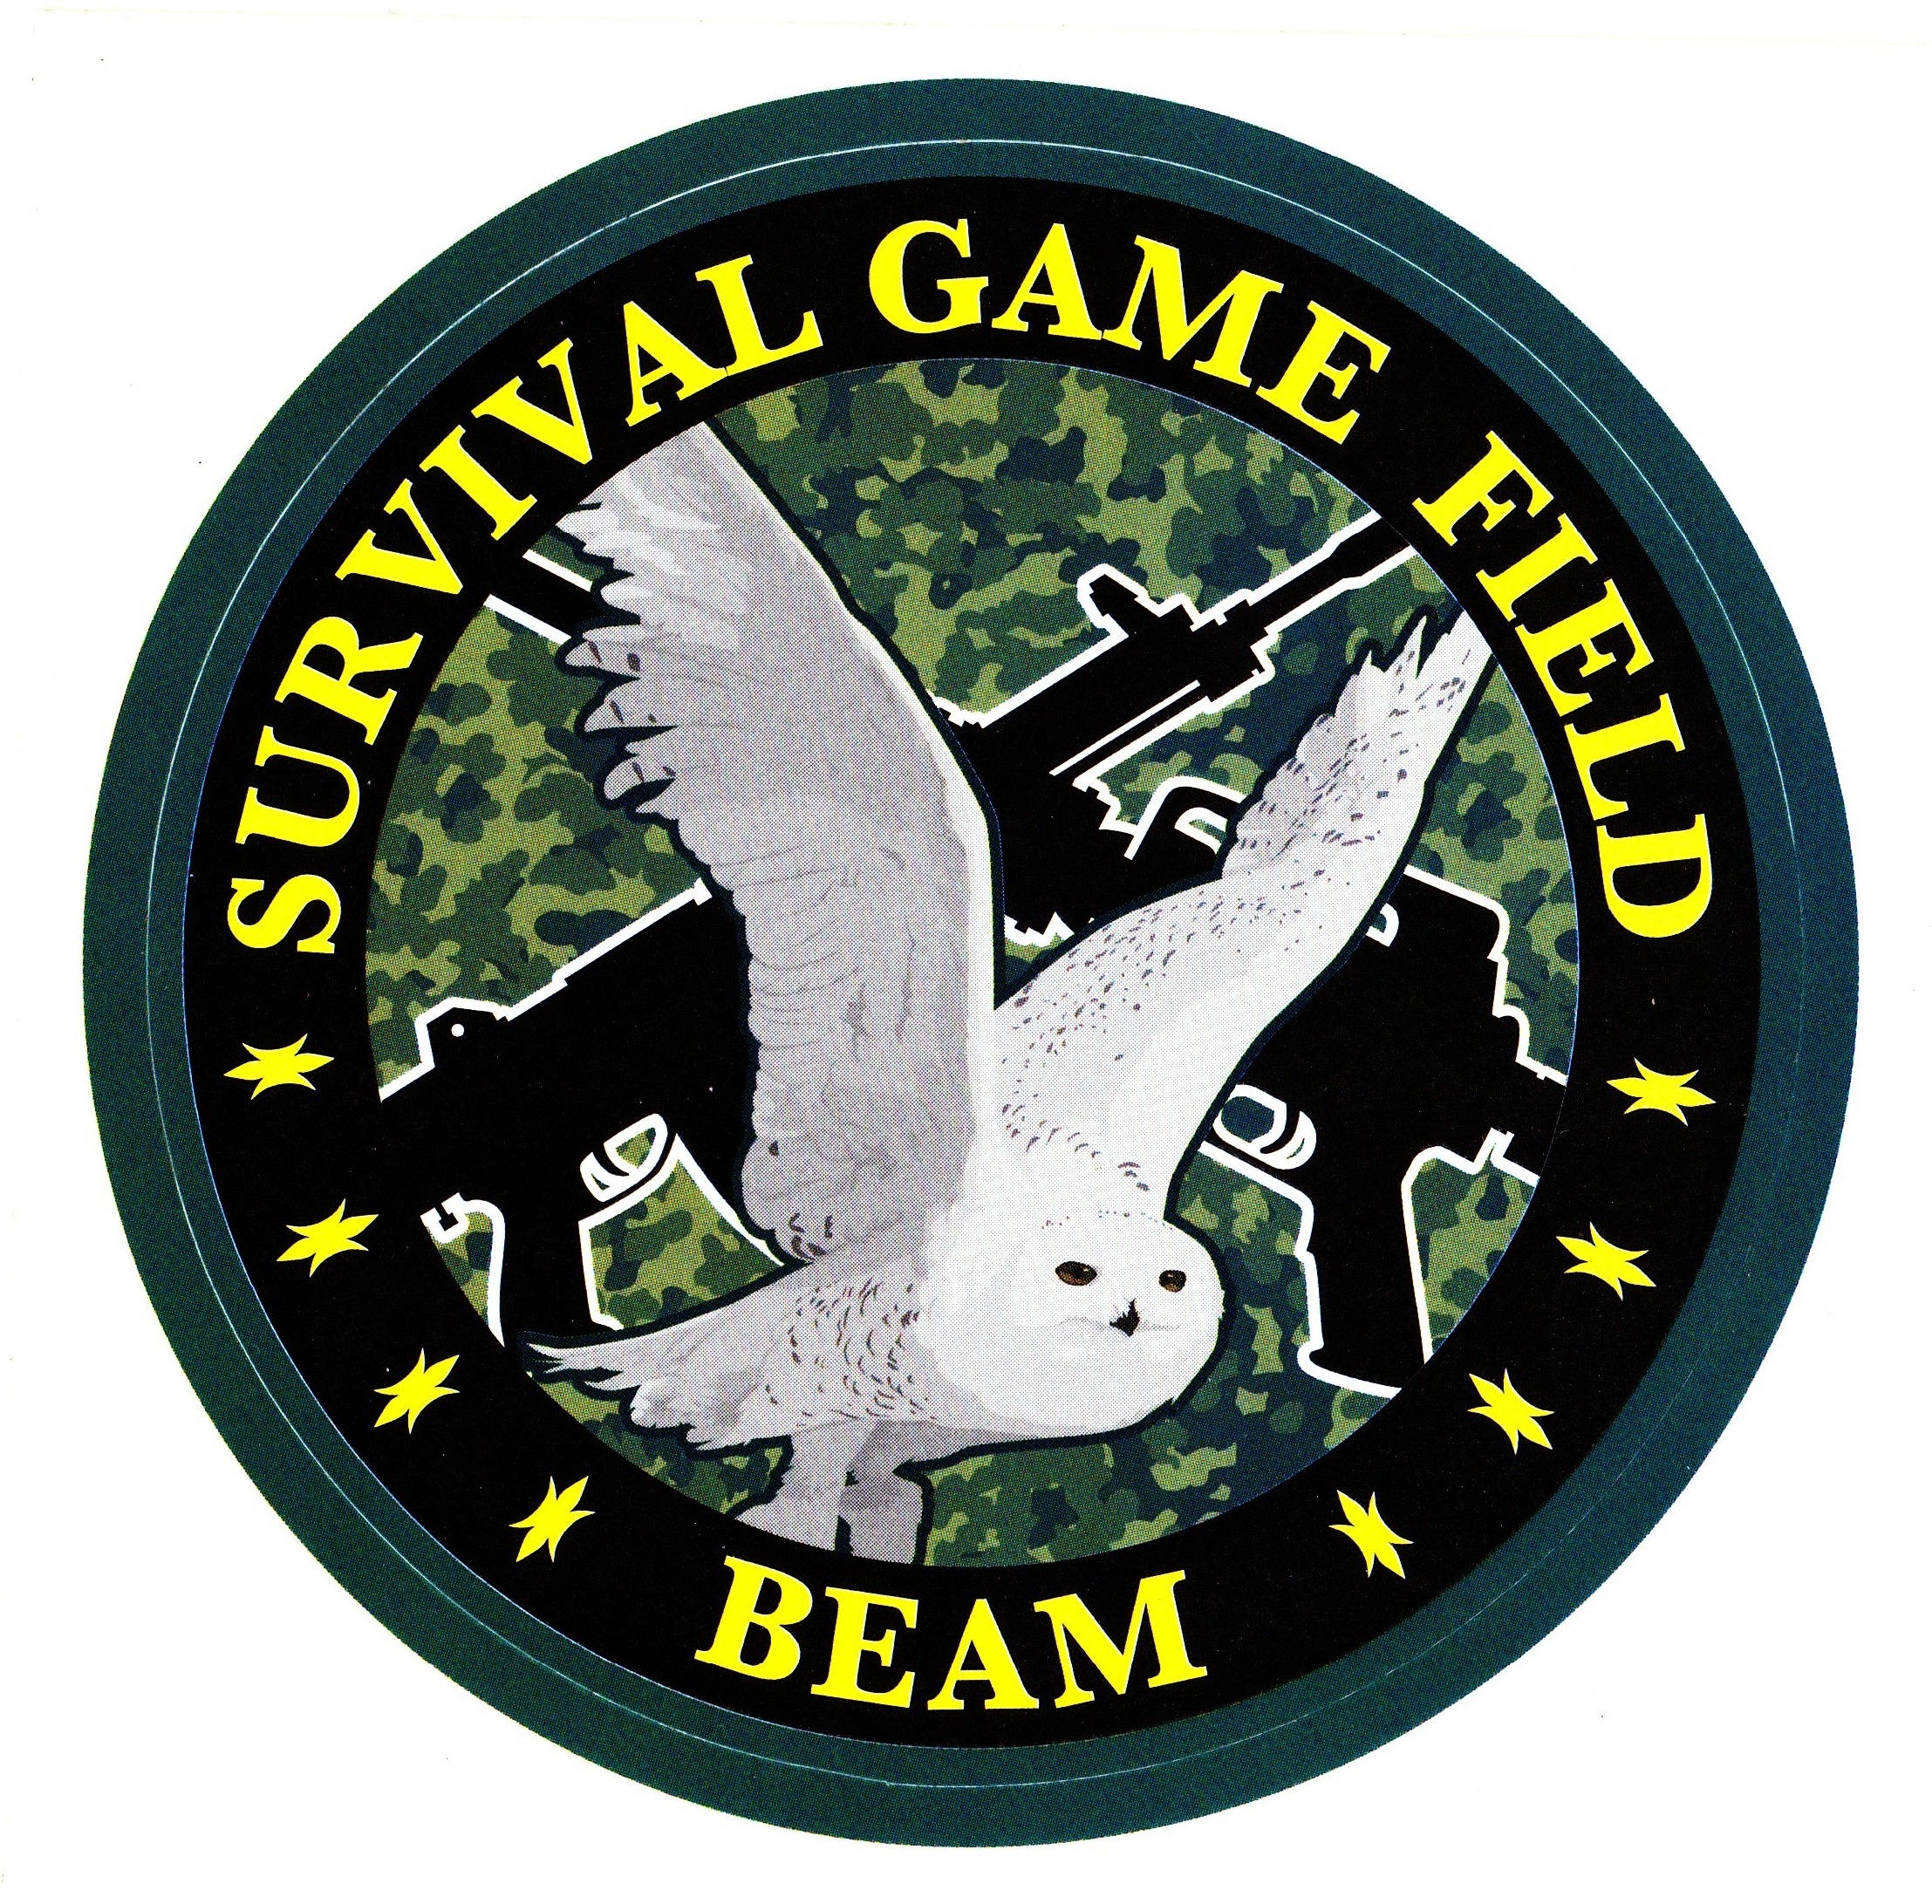 Survivalgamefield Beam バーベキューレンタルのbbq Park